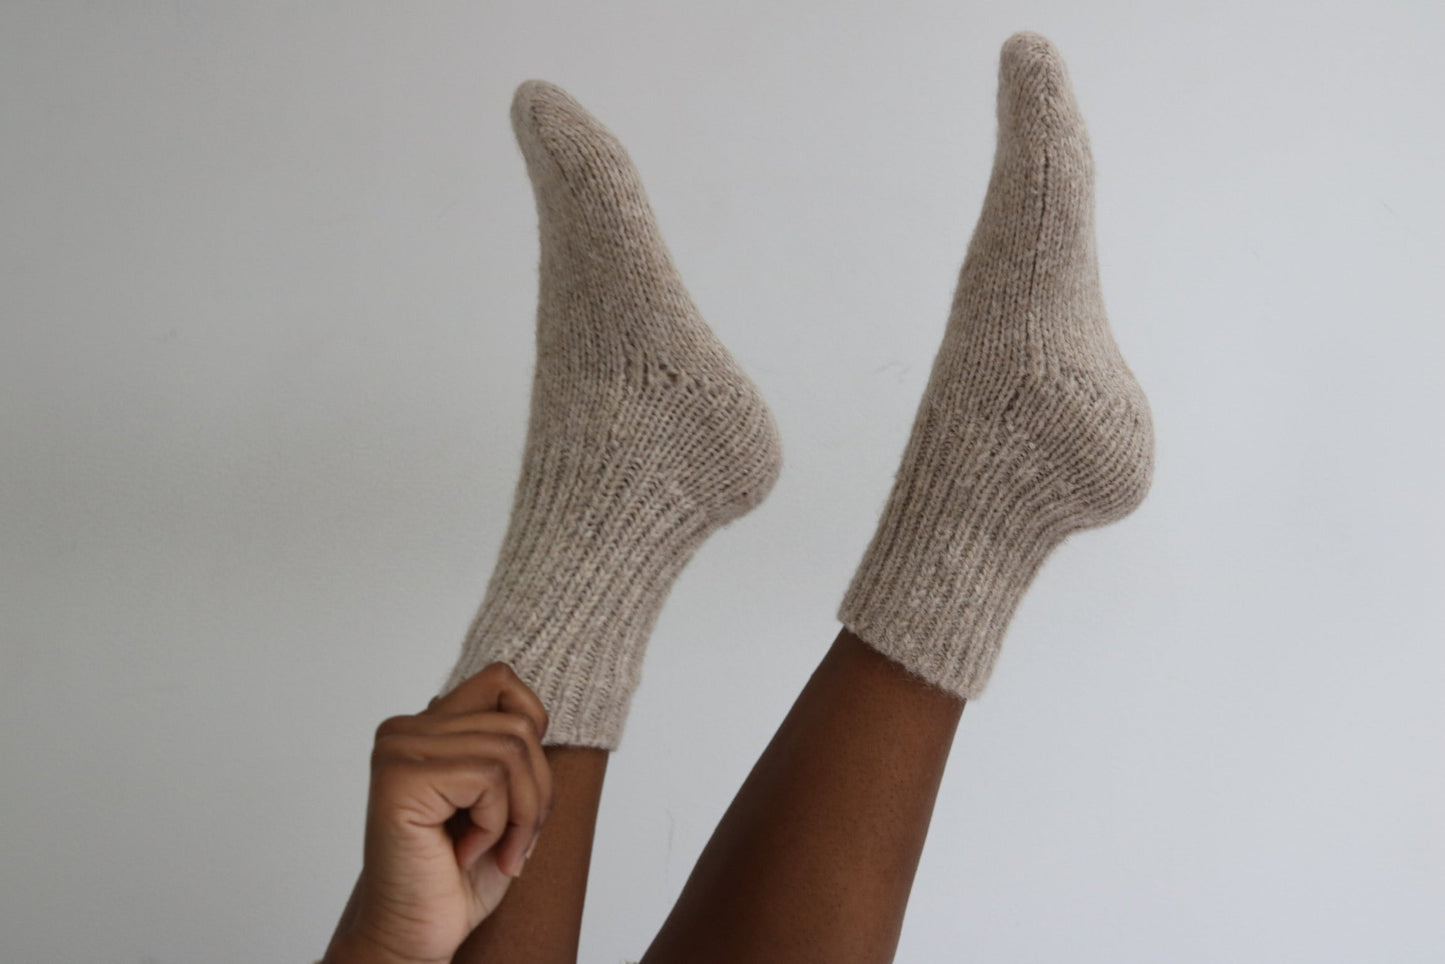 Danny Knitted Alpaca Socks